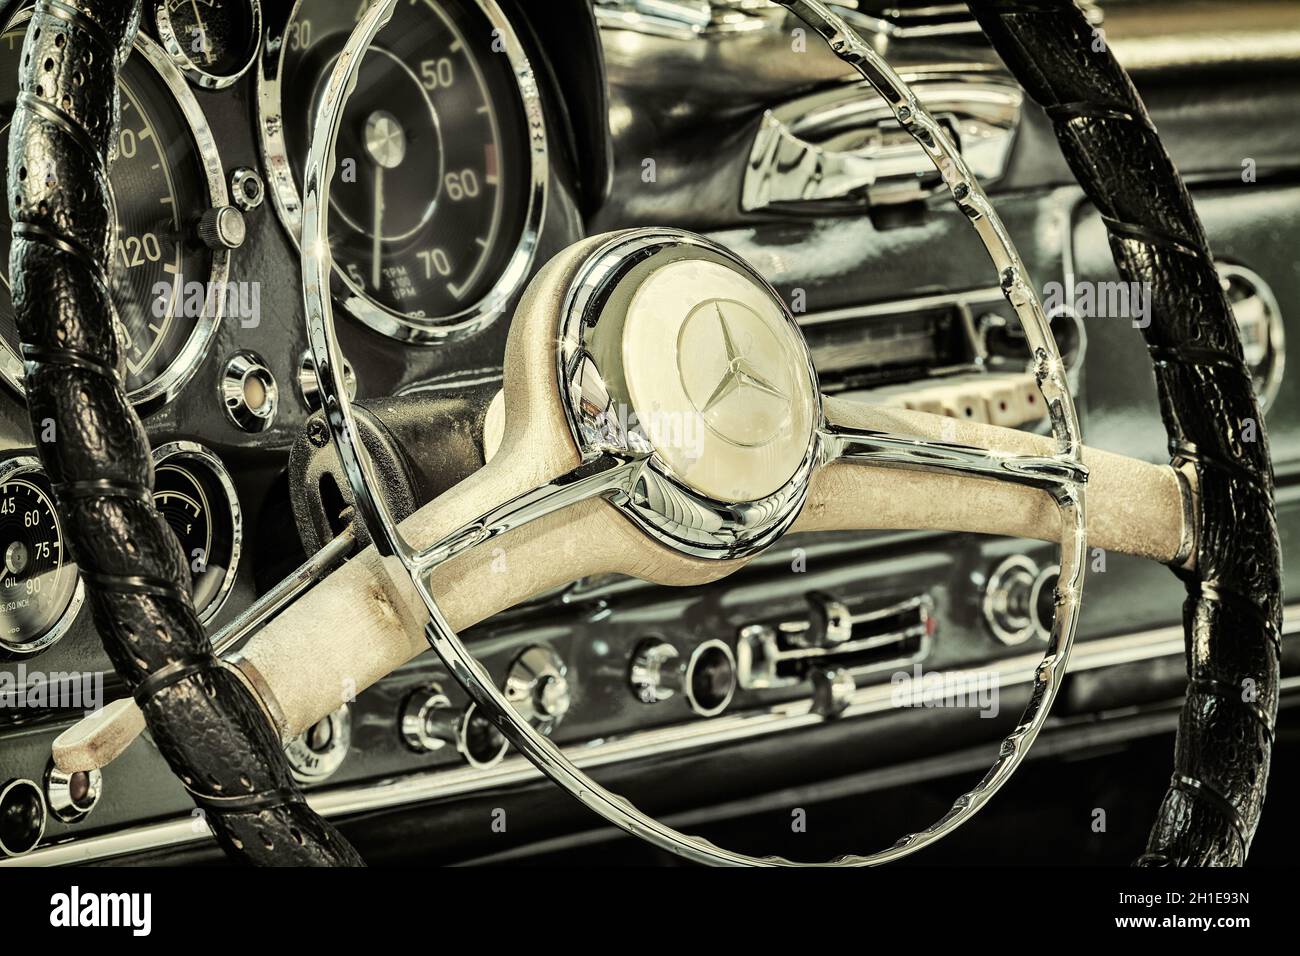 DREMPT, PAESI BASSI - 19 NOVEMBRE 2014: Immagine retrò del cruscotto di una Mercedes-Benz 190 SL Pagode 1960 a Drempt, Paesi Bassi Foto Stock